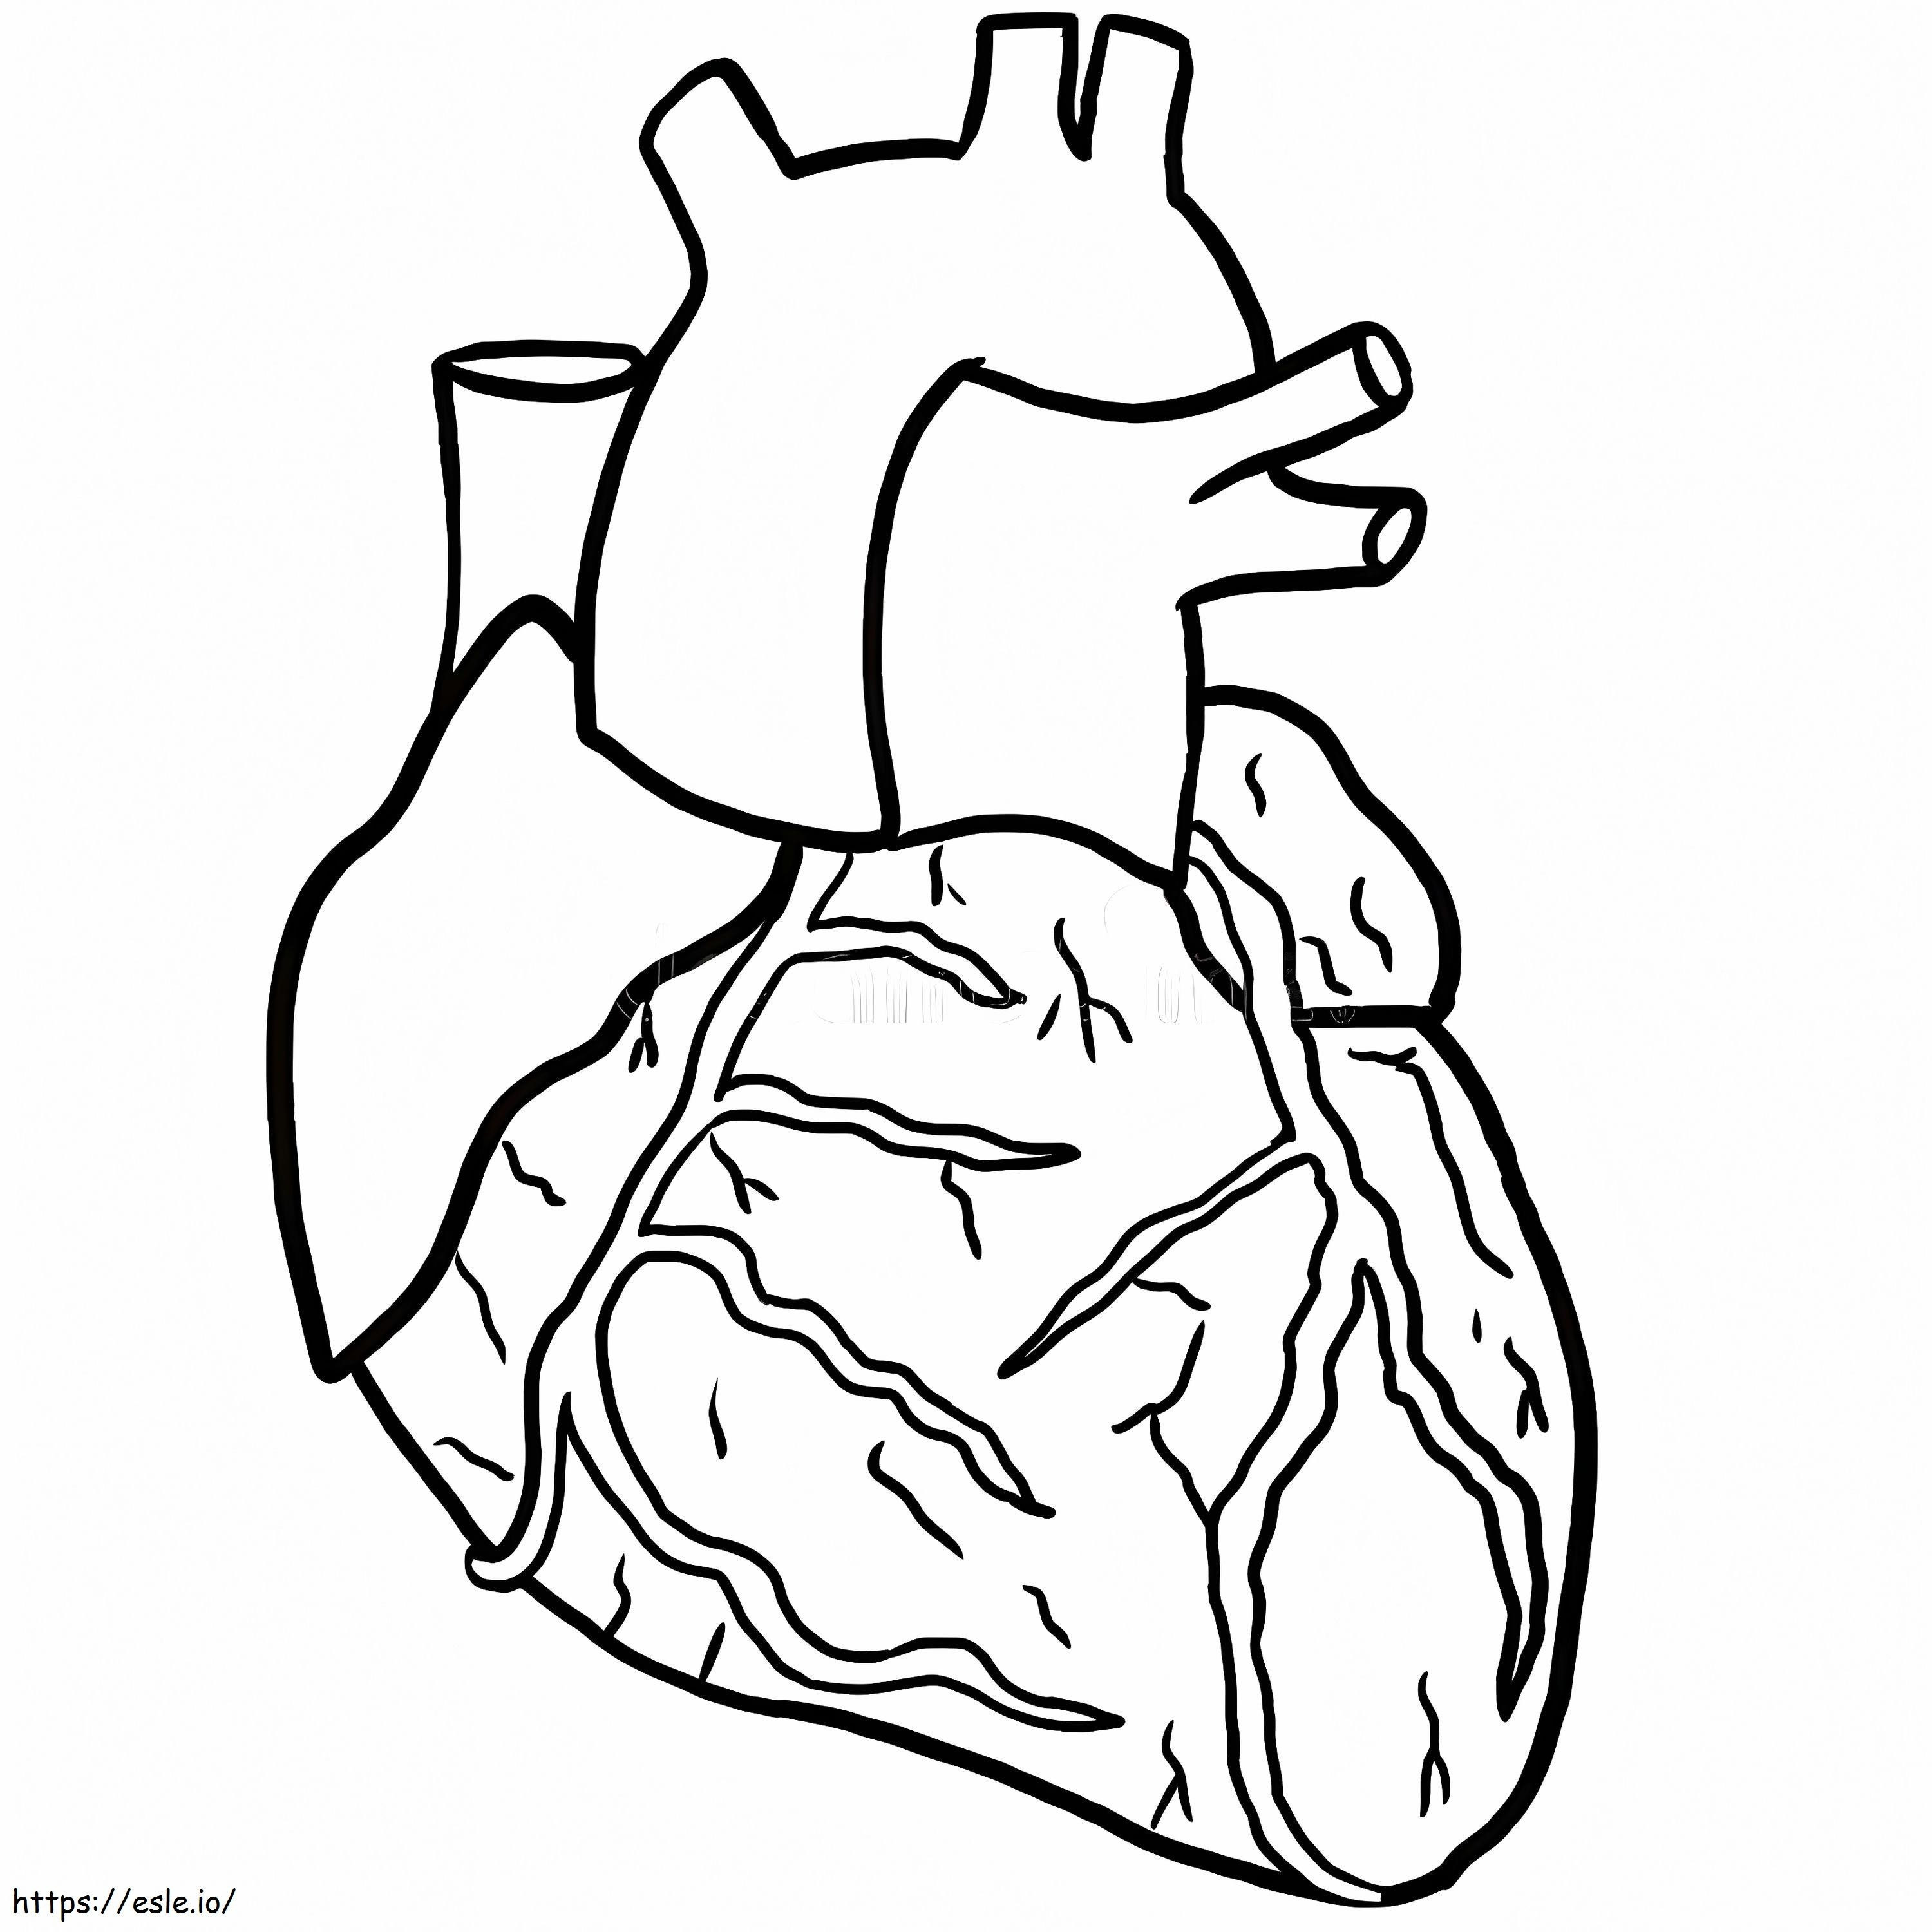 Anatomik Kalp boyama